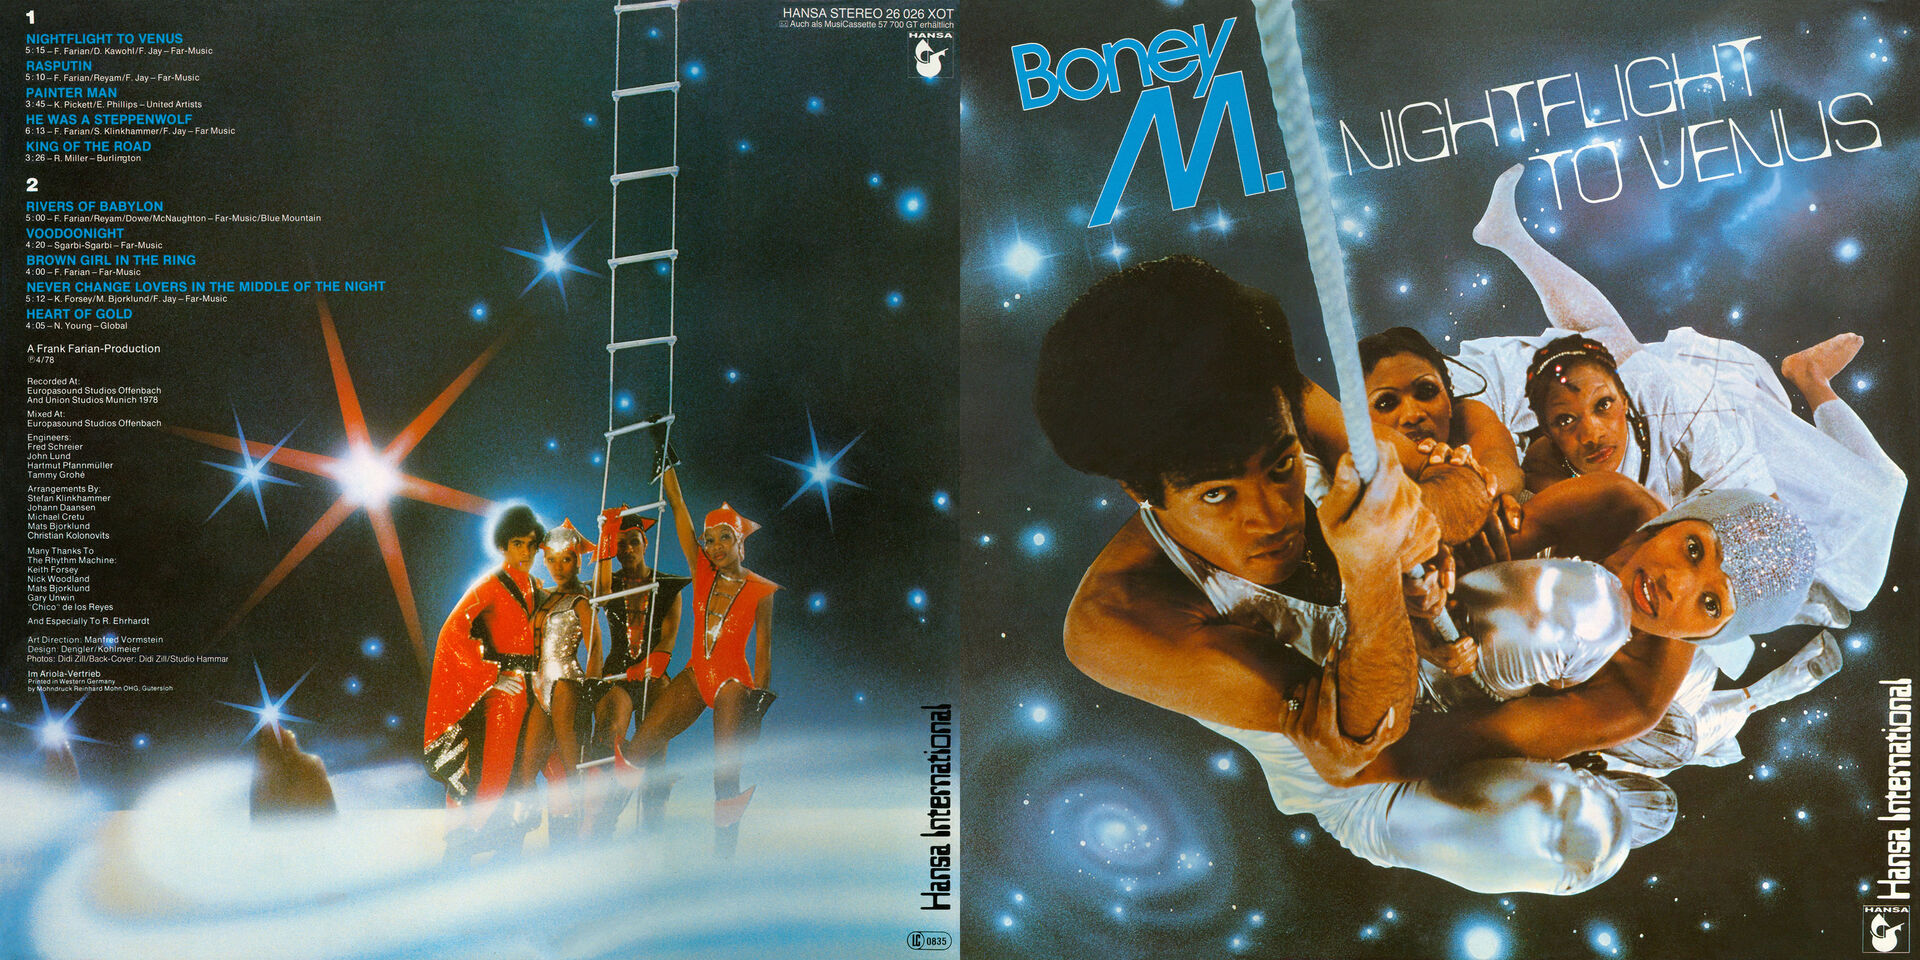 Boney m venus. Группа Boney m. 1978. Boney m Nightflight to Venus 1978 альбом. Бони м 1978 альбом года. Обложки пластинок Boney m.